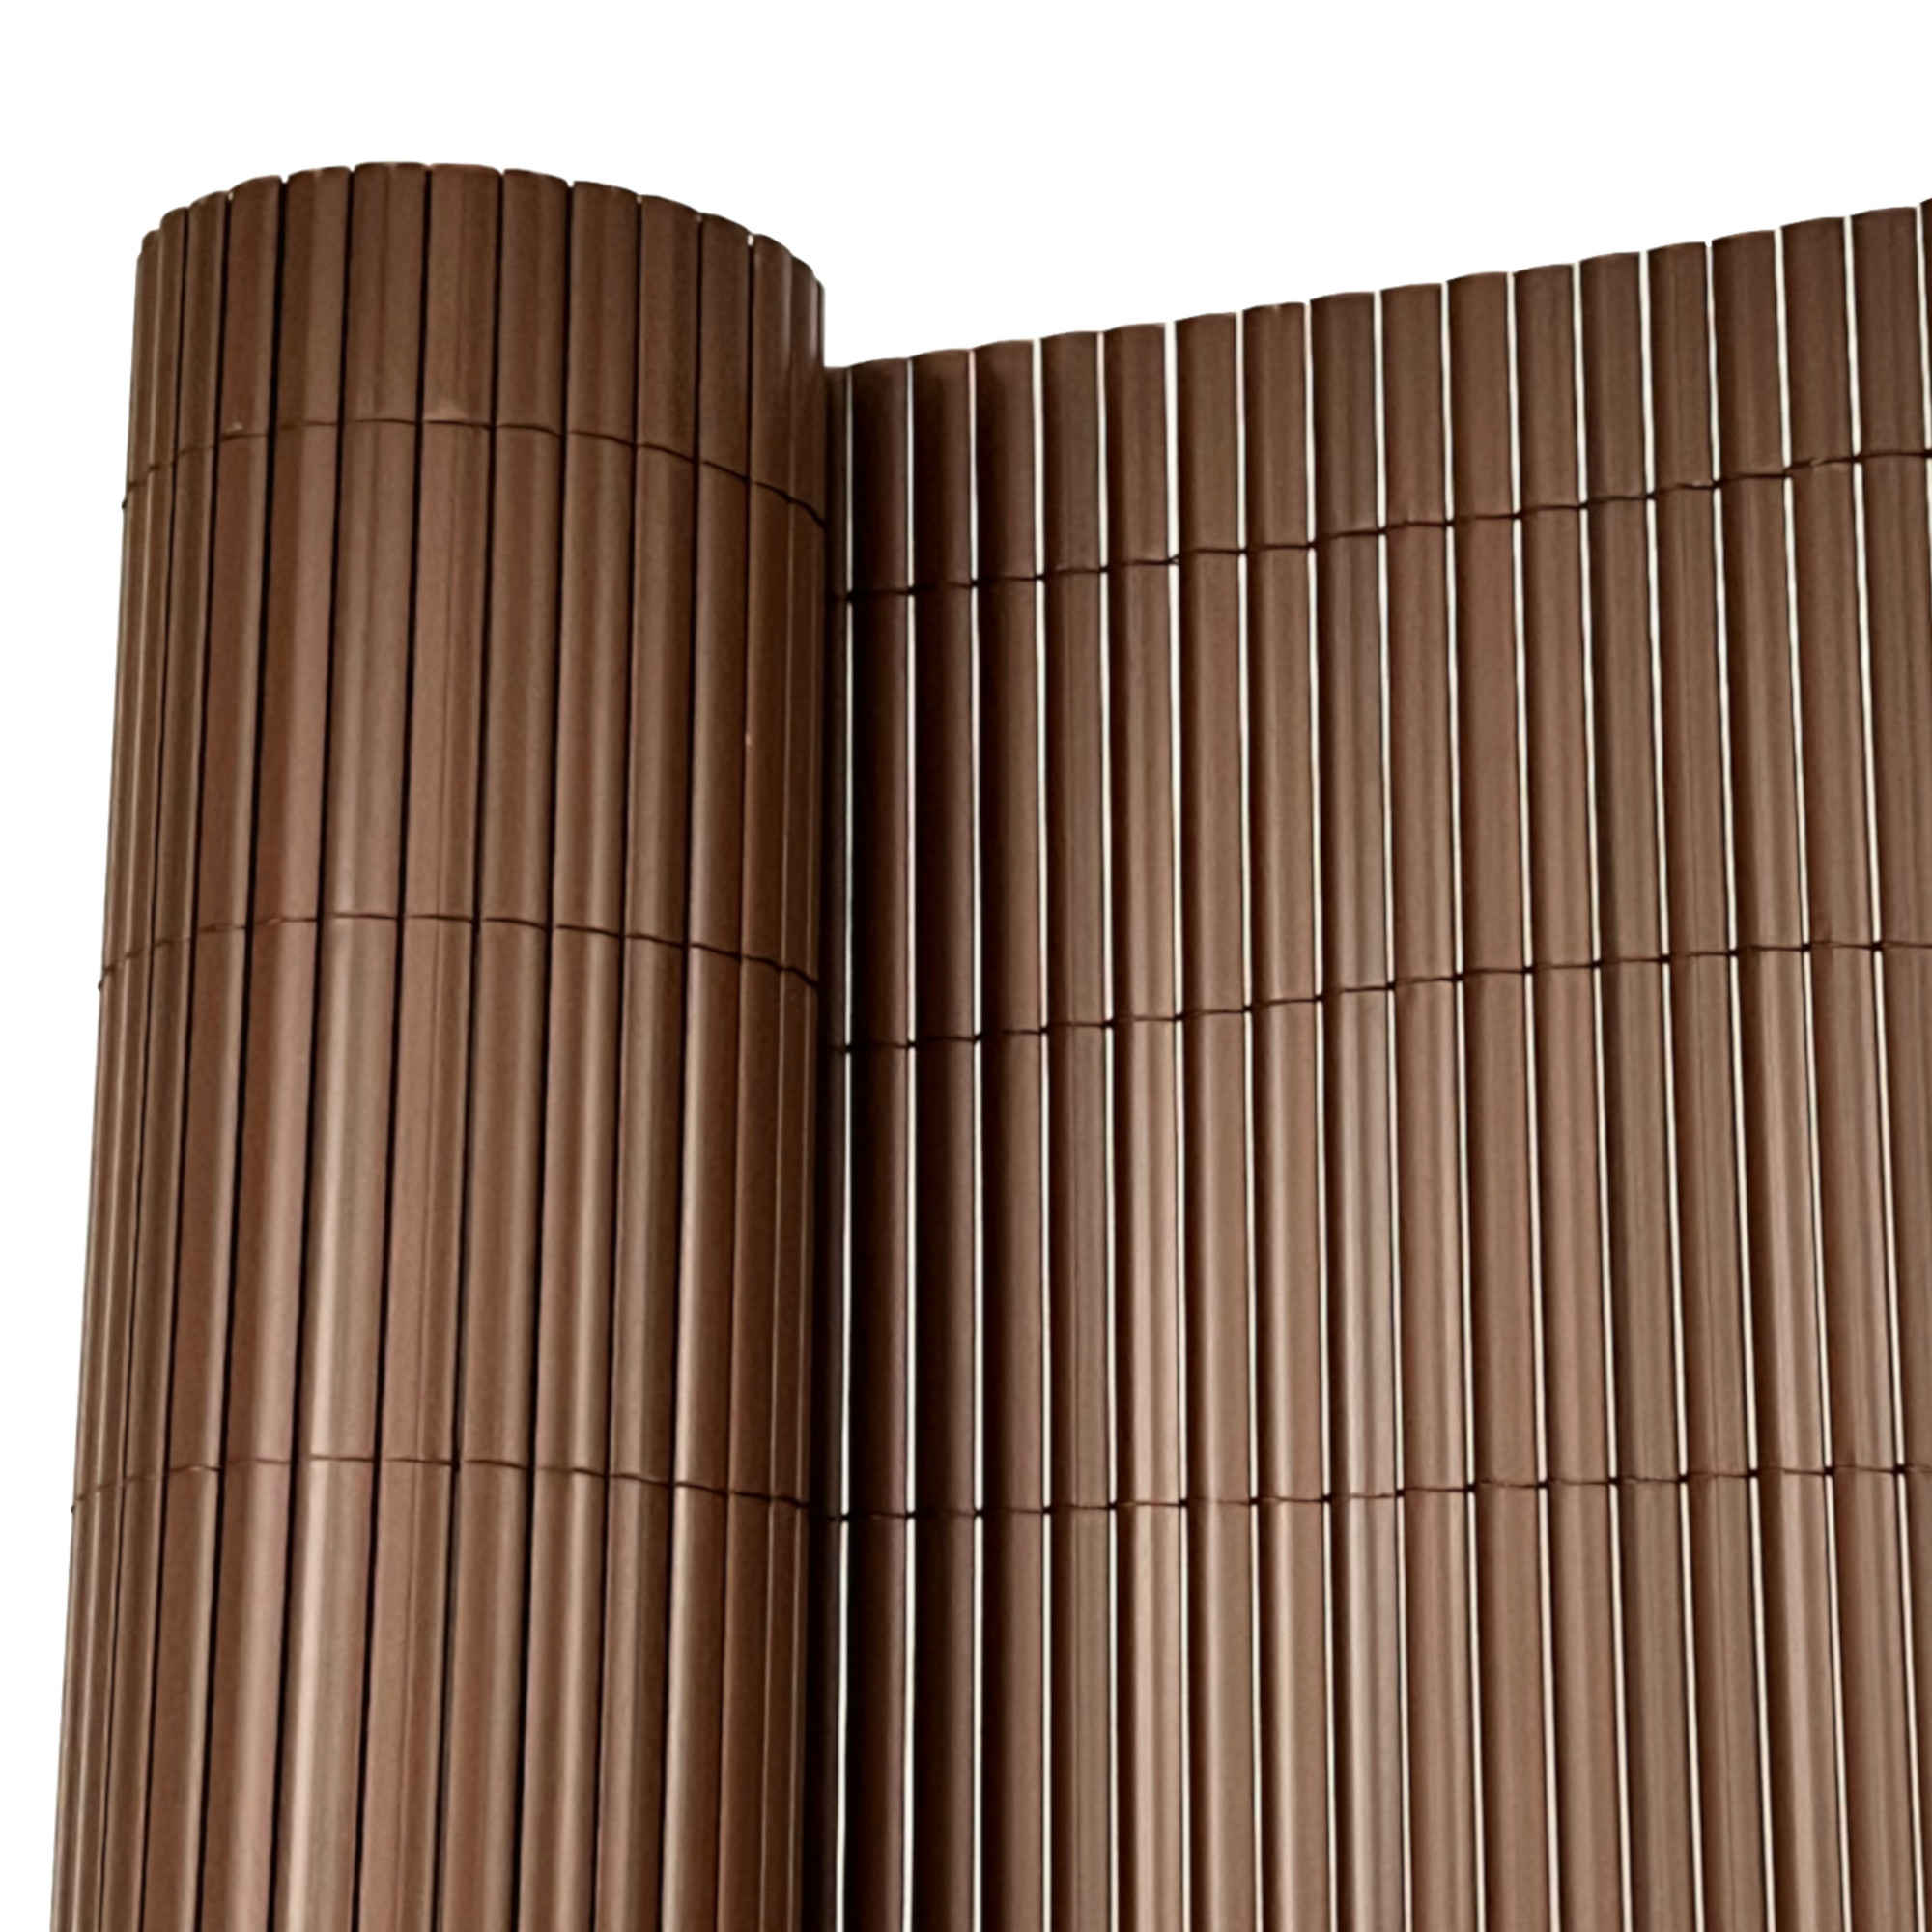 4m x 1.2m PVC Fencing (Brown)